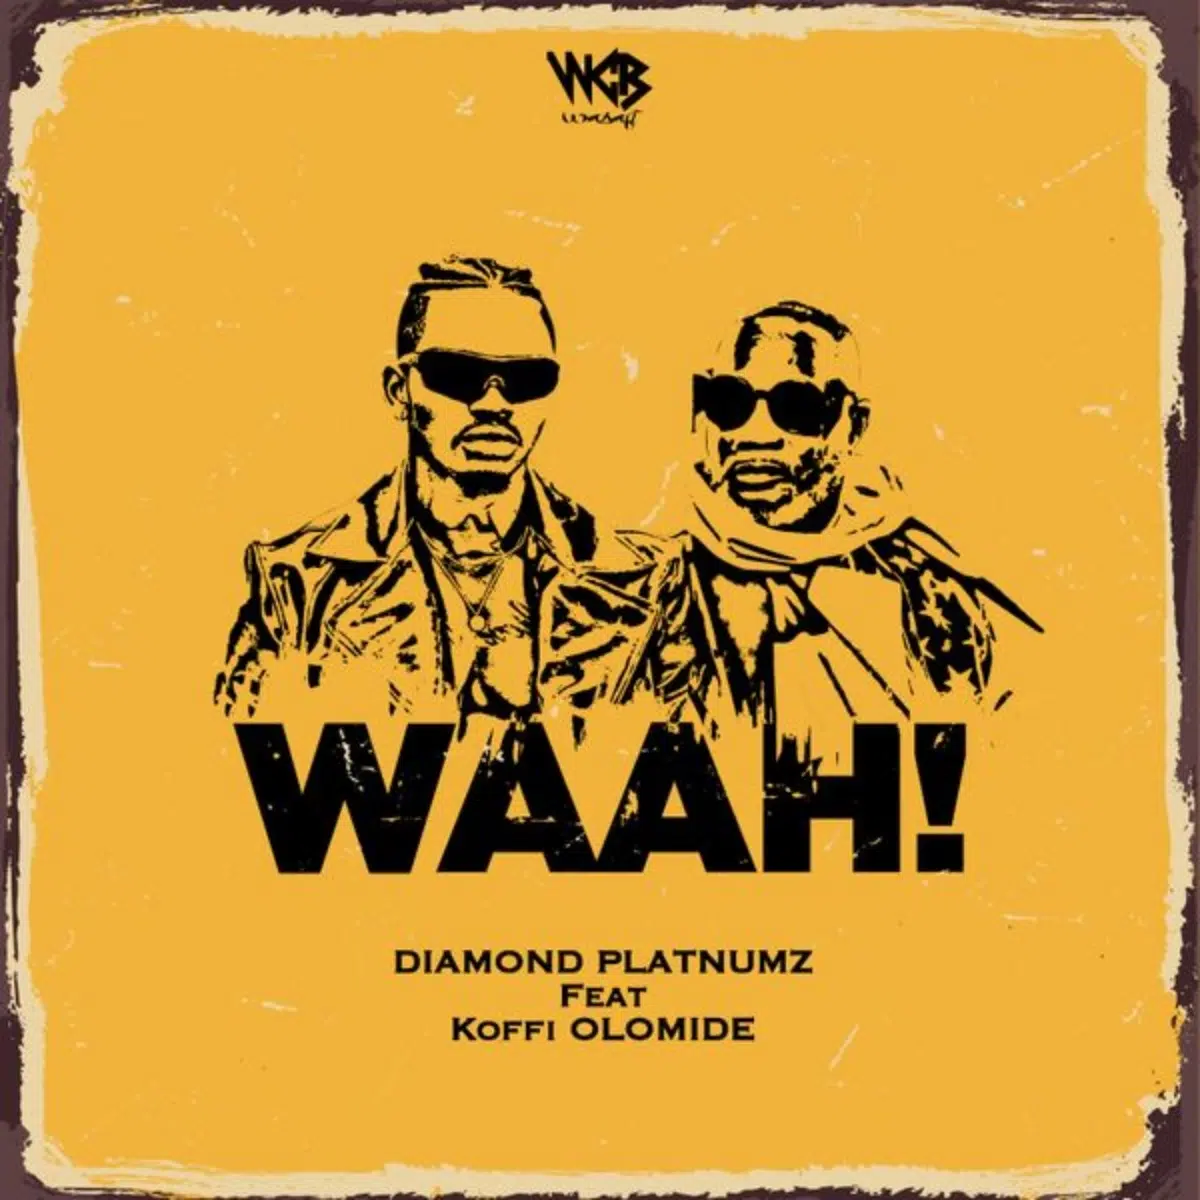 DOWNLOAD: Diamond Platnumz Ft. Koffi Olomide – “Waah!” Video + Audio Mp3